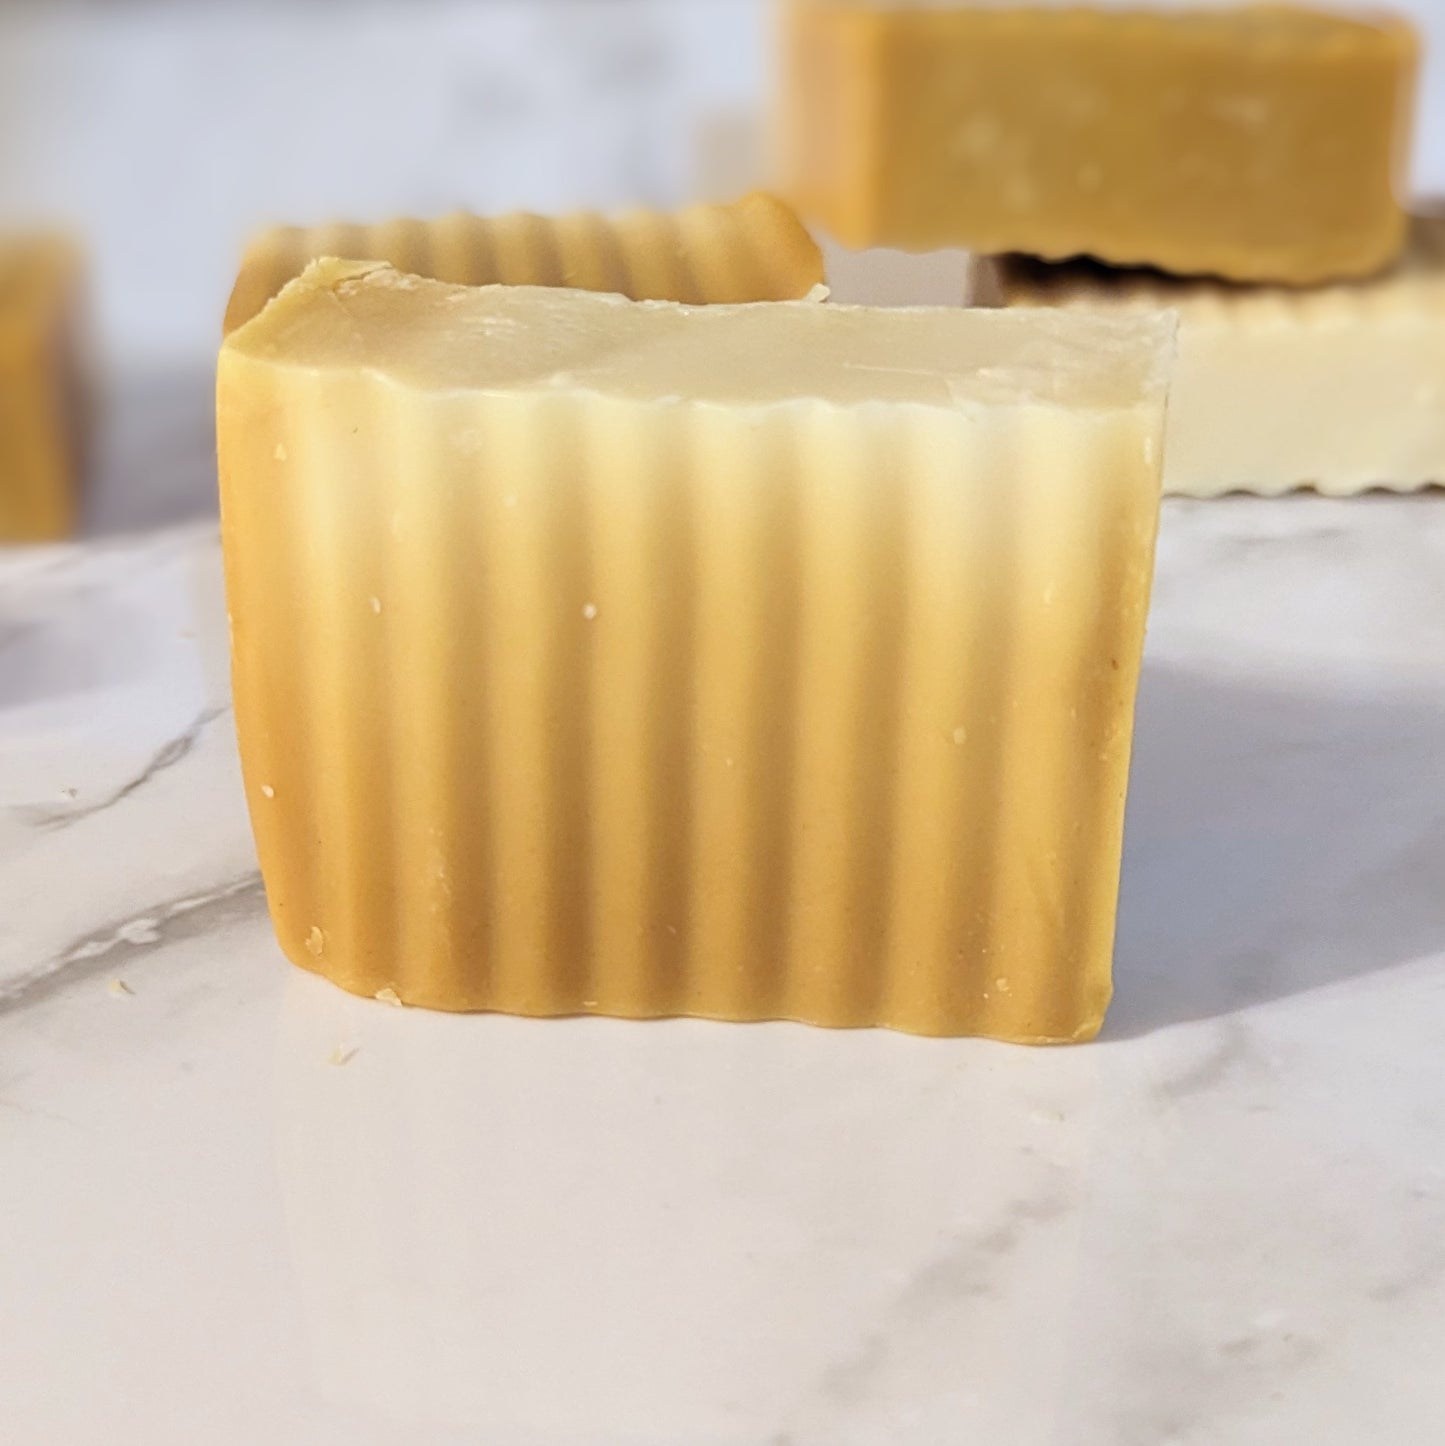 Turmeric & Honey - Infused Soap